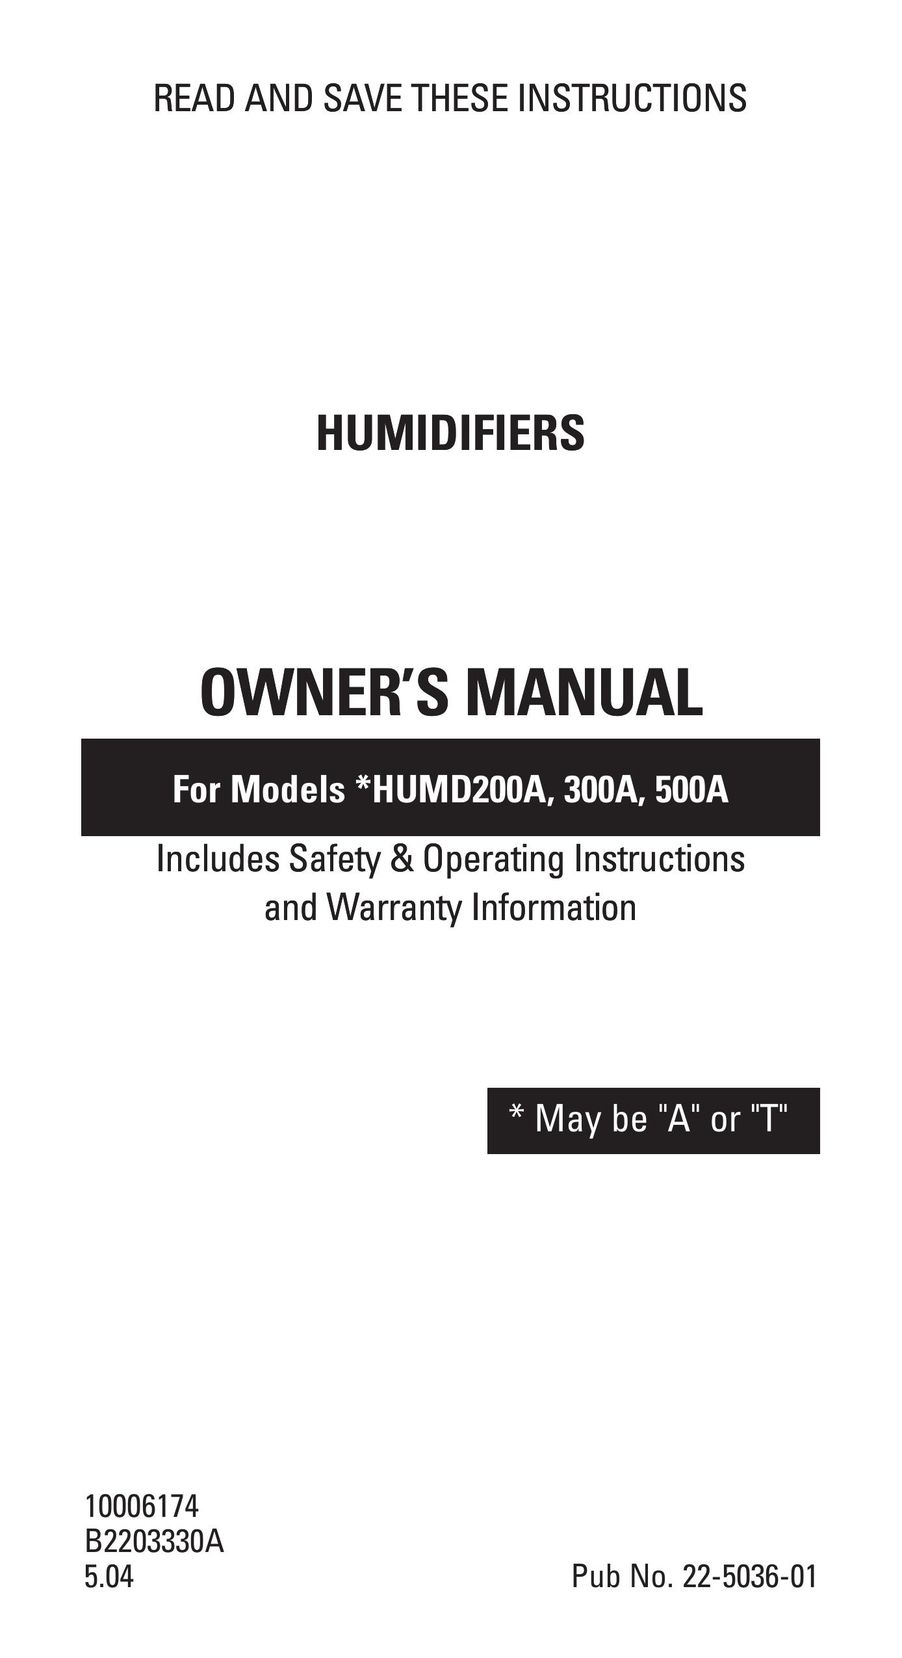 American Standard 200A Humidifier User Manual